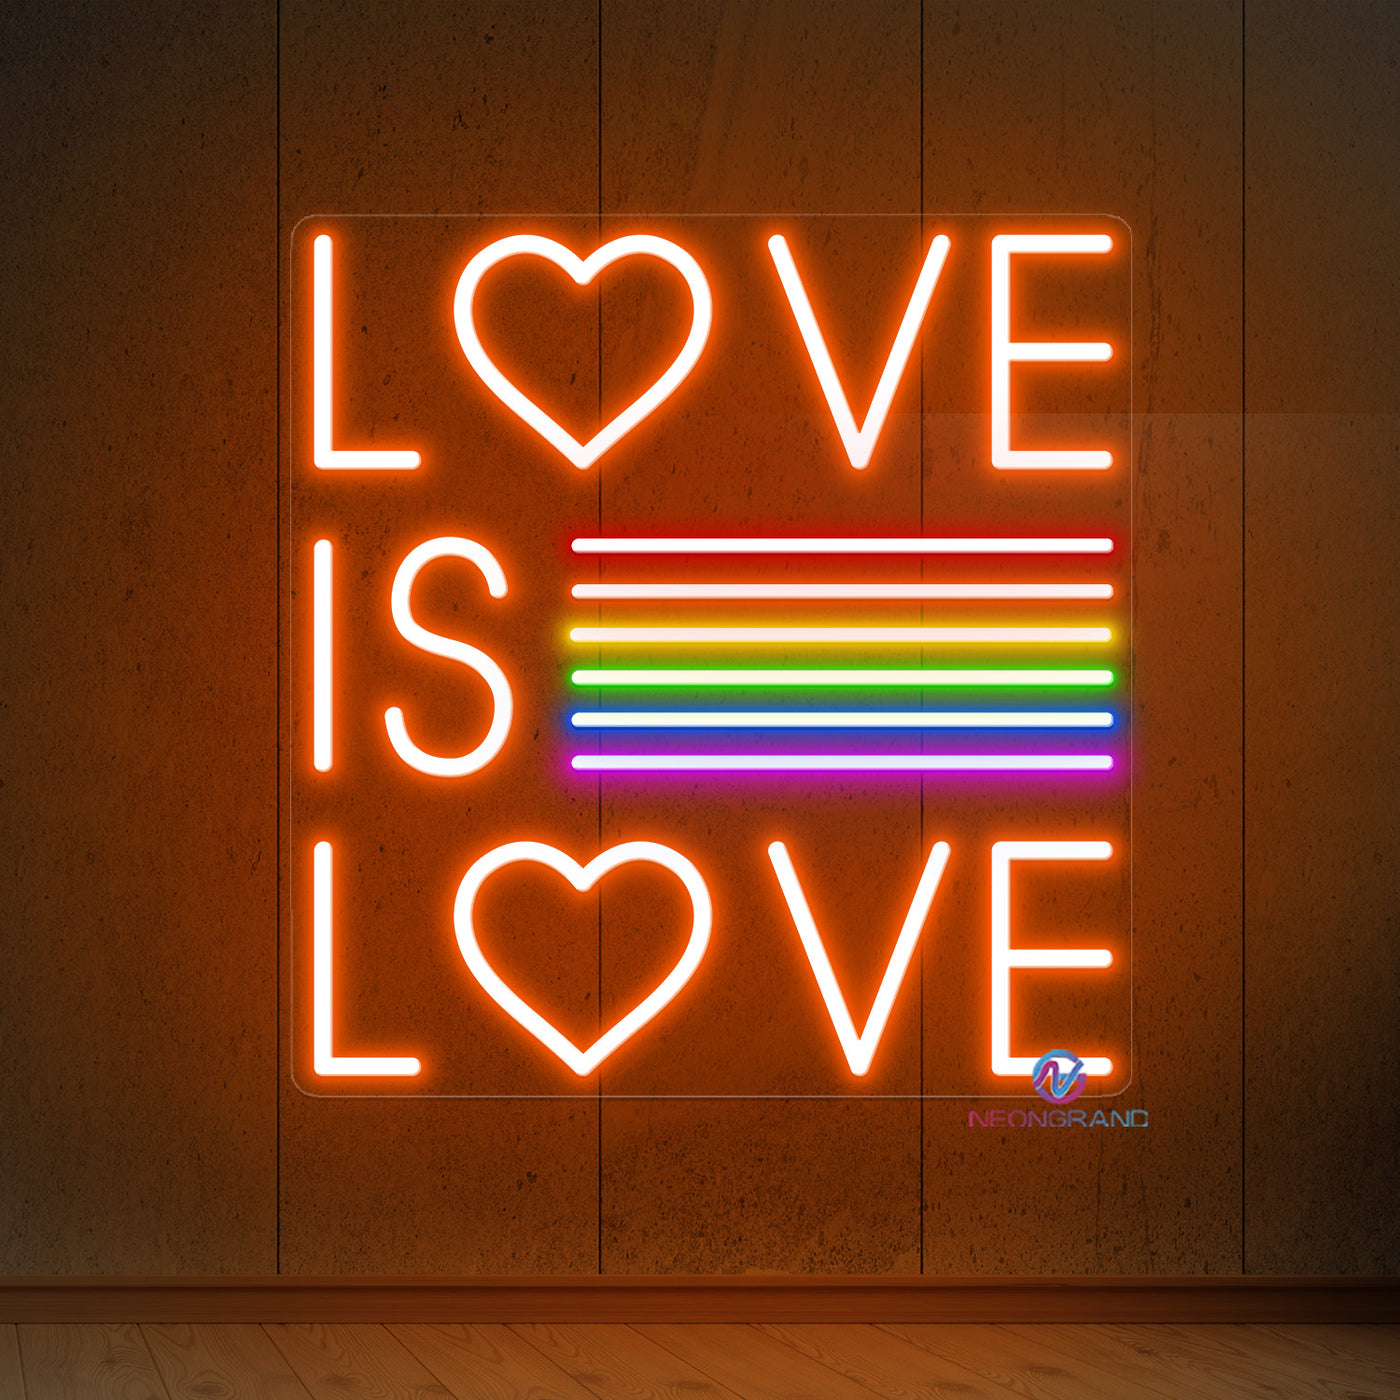 Love Is Love Neon Sign LGBTQ+ Led Light